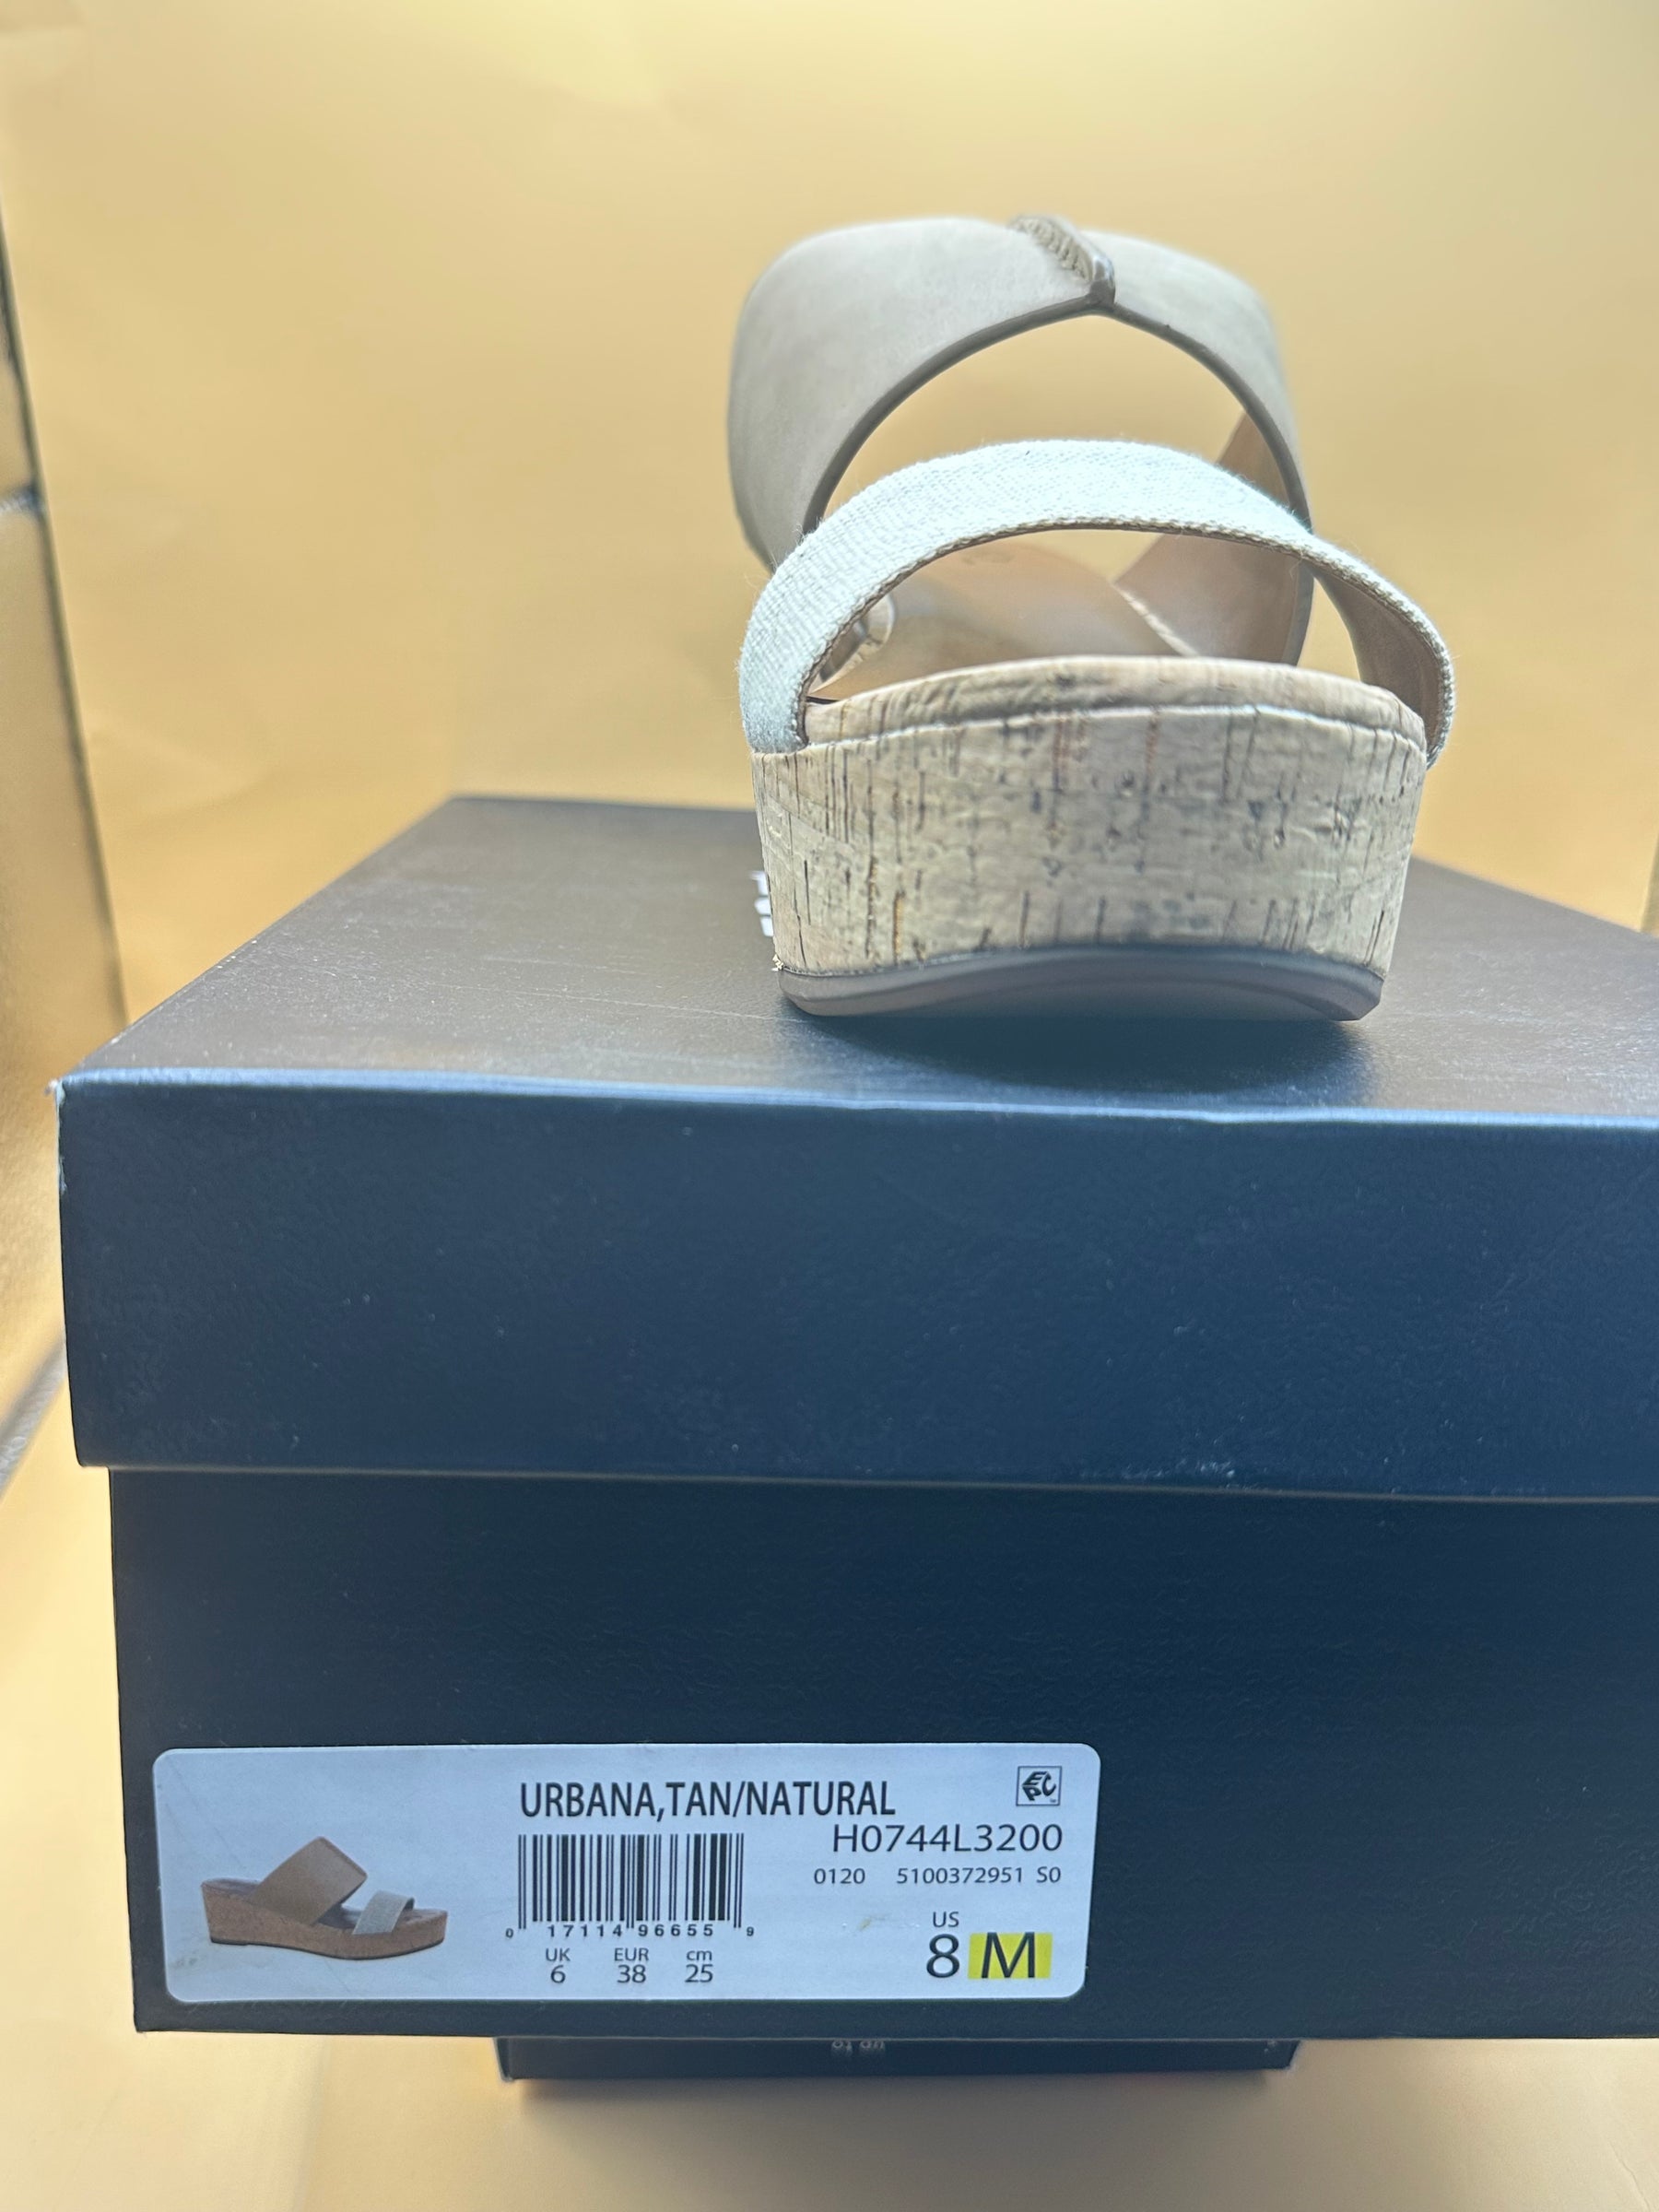 Naturalizer Tan/Natural Wedge Sandal Size 8